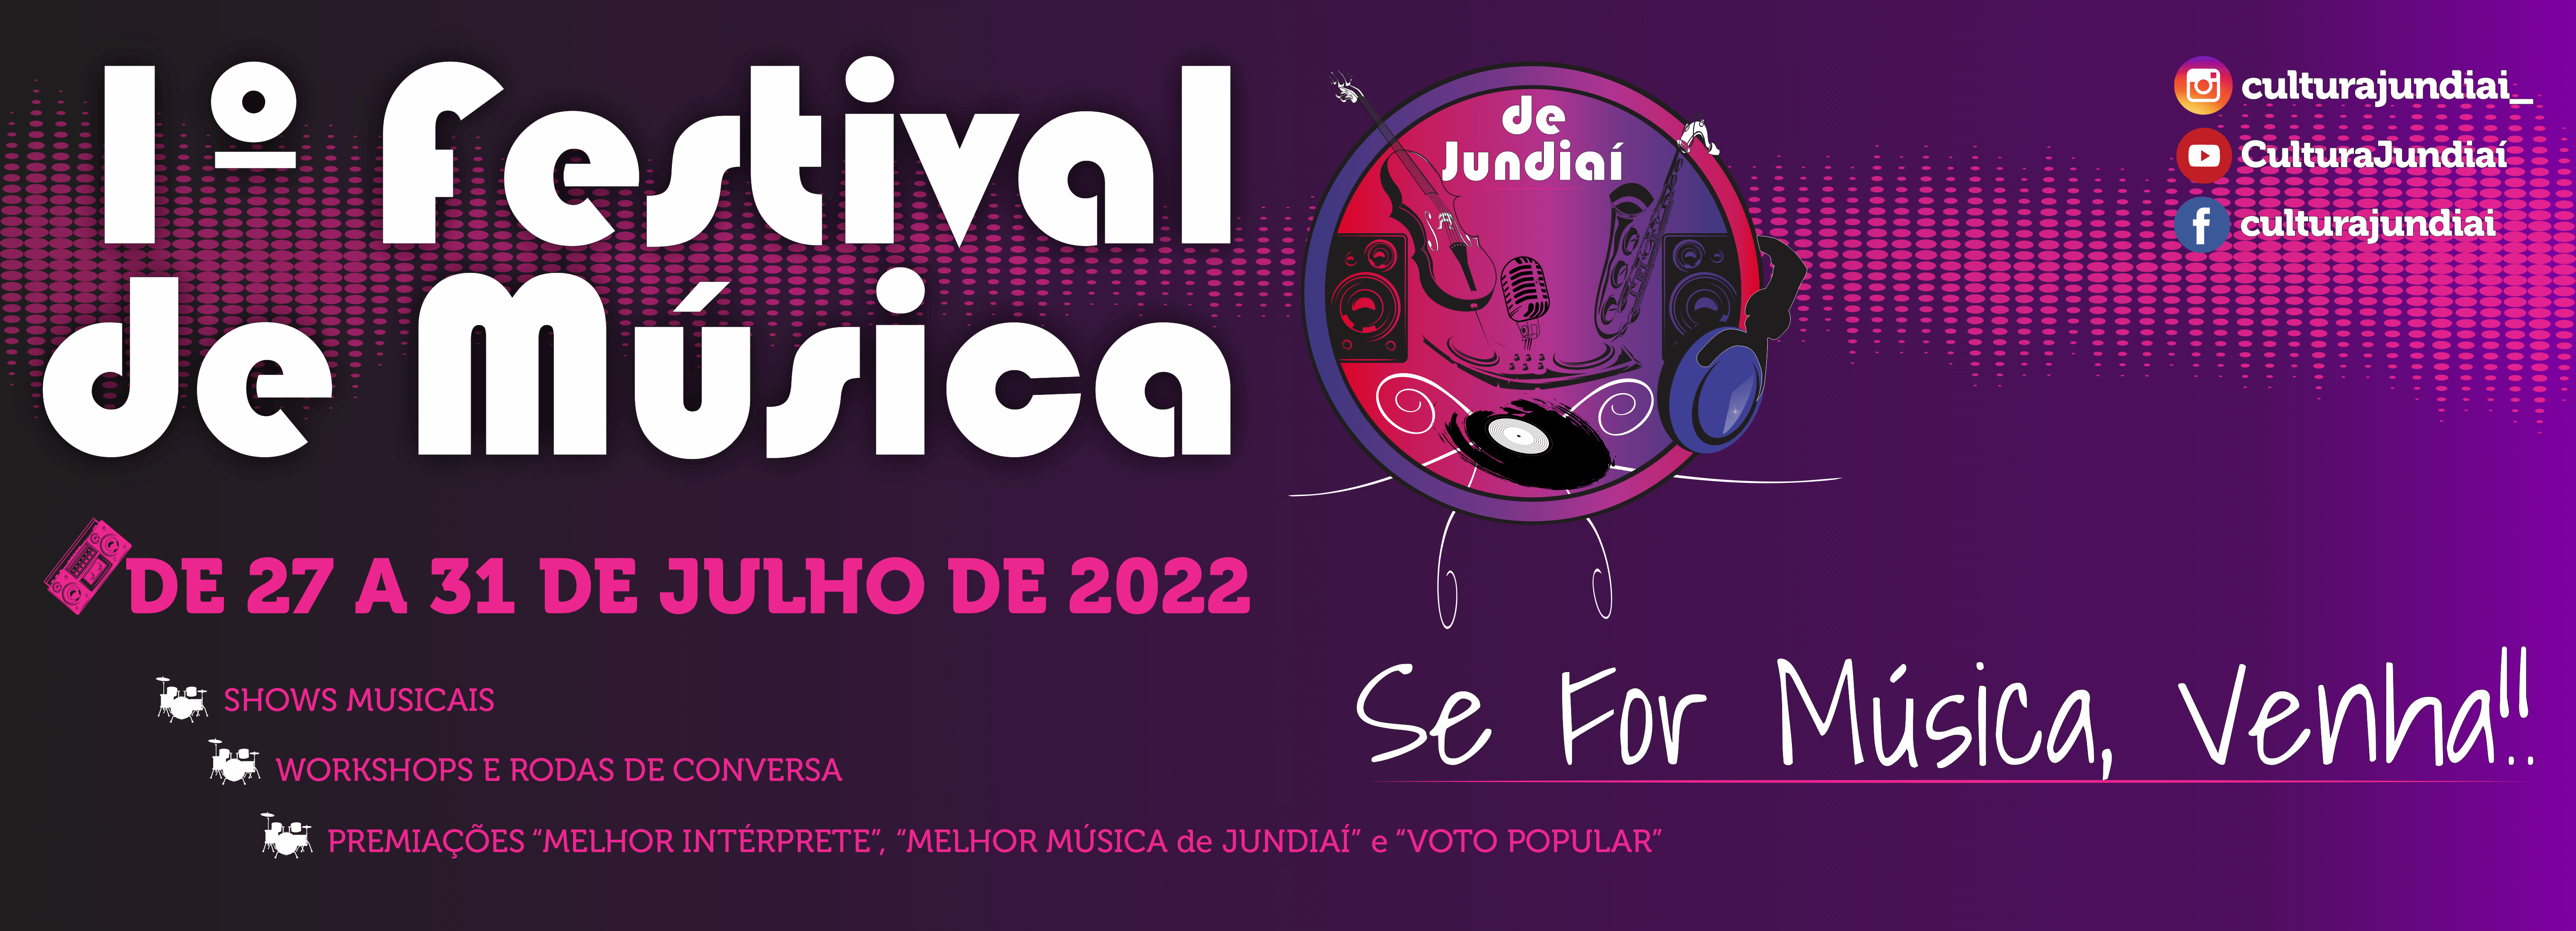 1º Festival de Música de Jundiaí